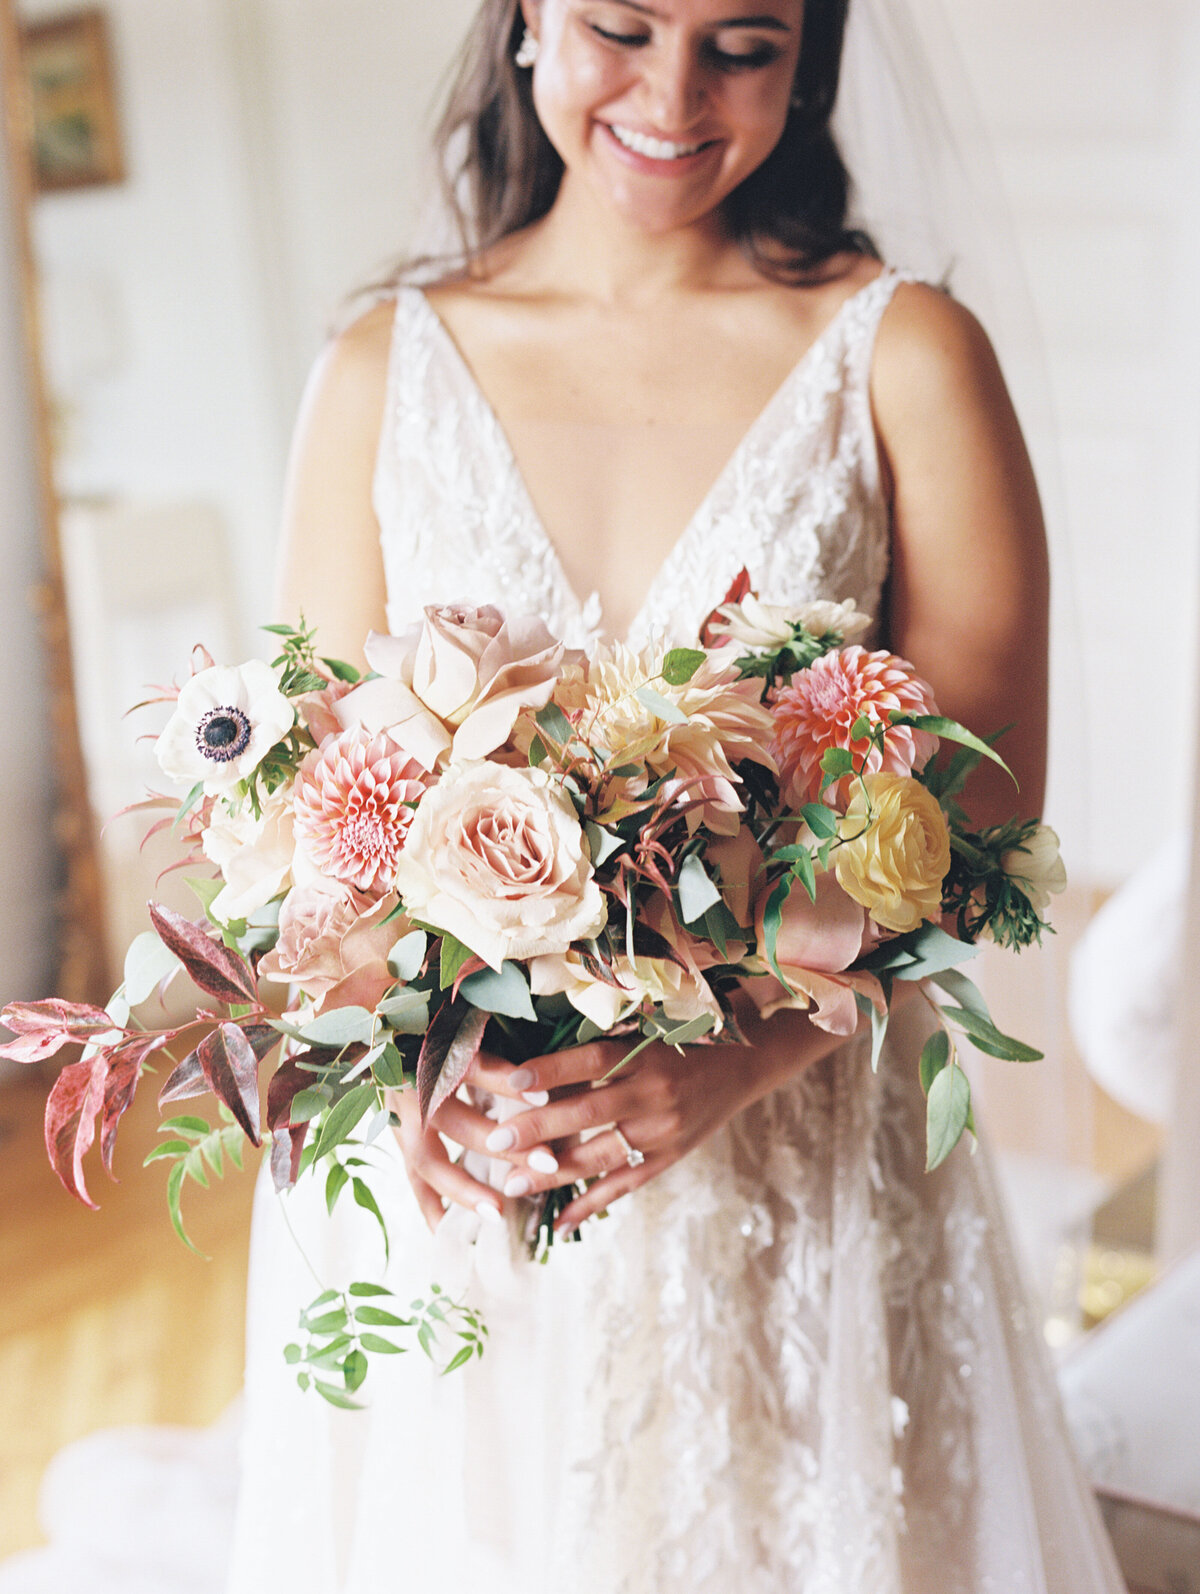 brides bouquet by Wild Dahlia Florals